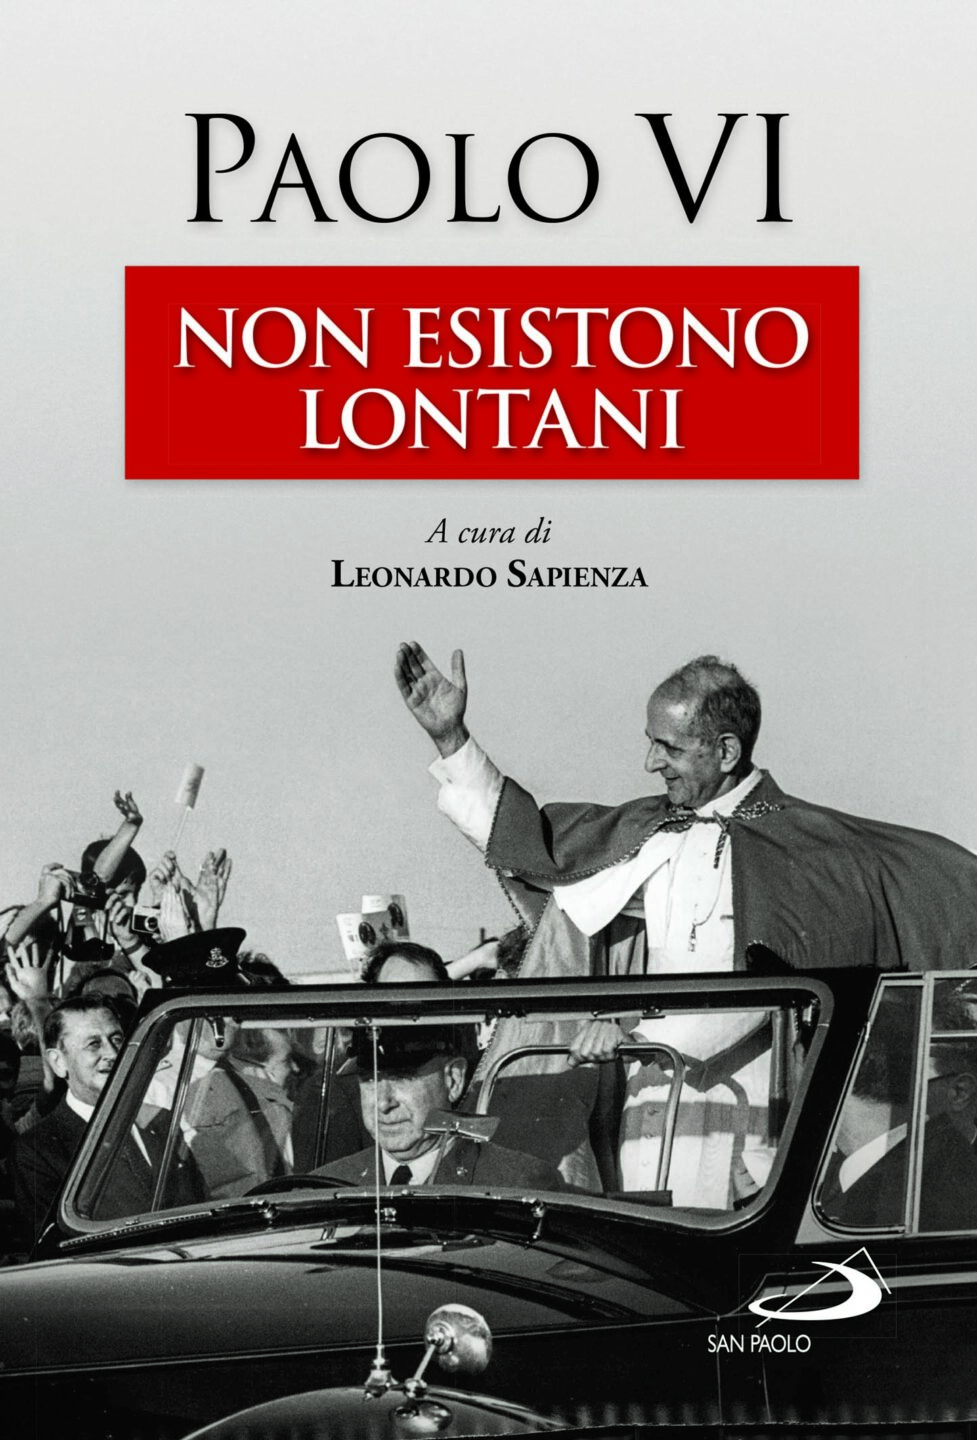 Mgr Sapienza publie  un livre intitulé "Paolo VI. Non esistono lontani"